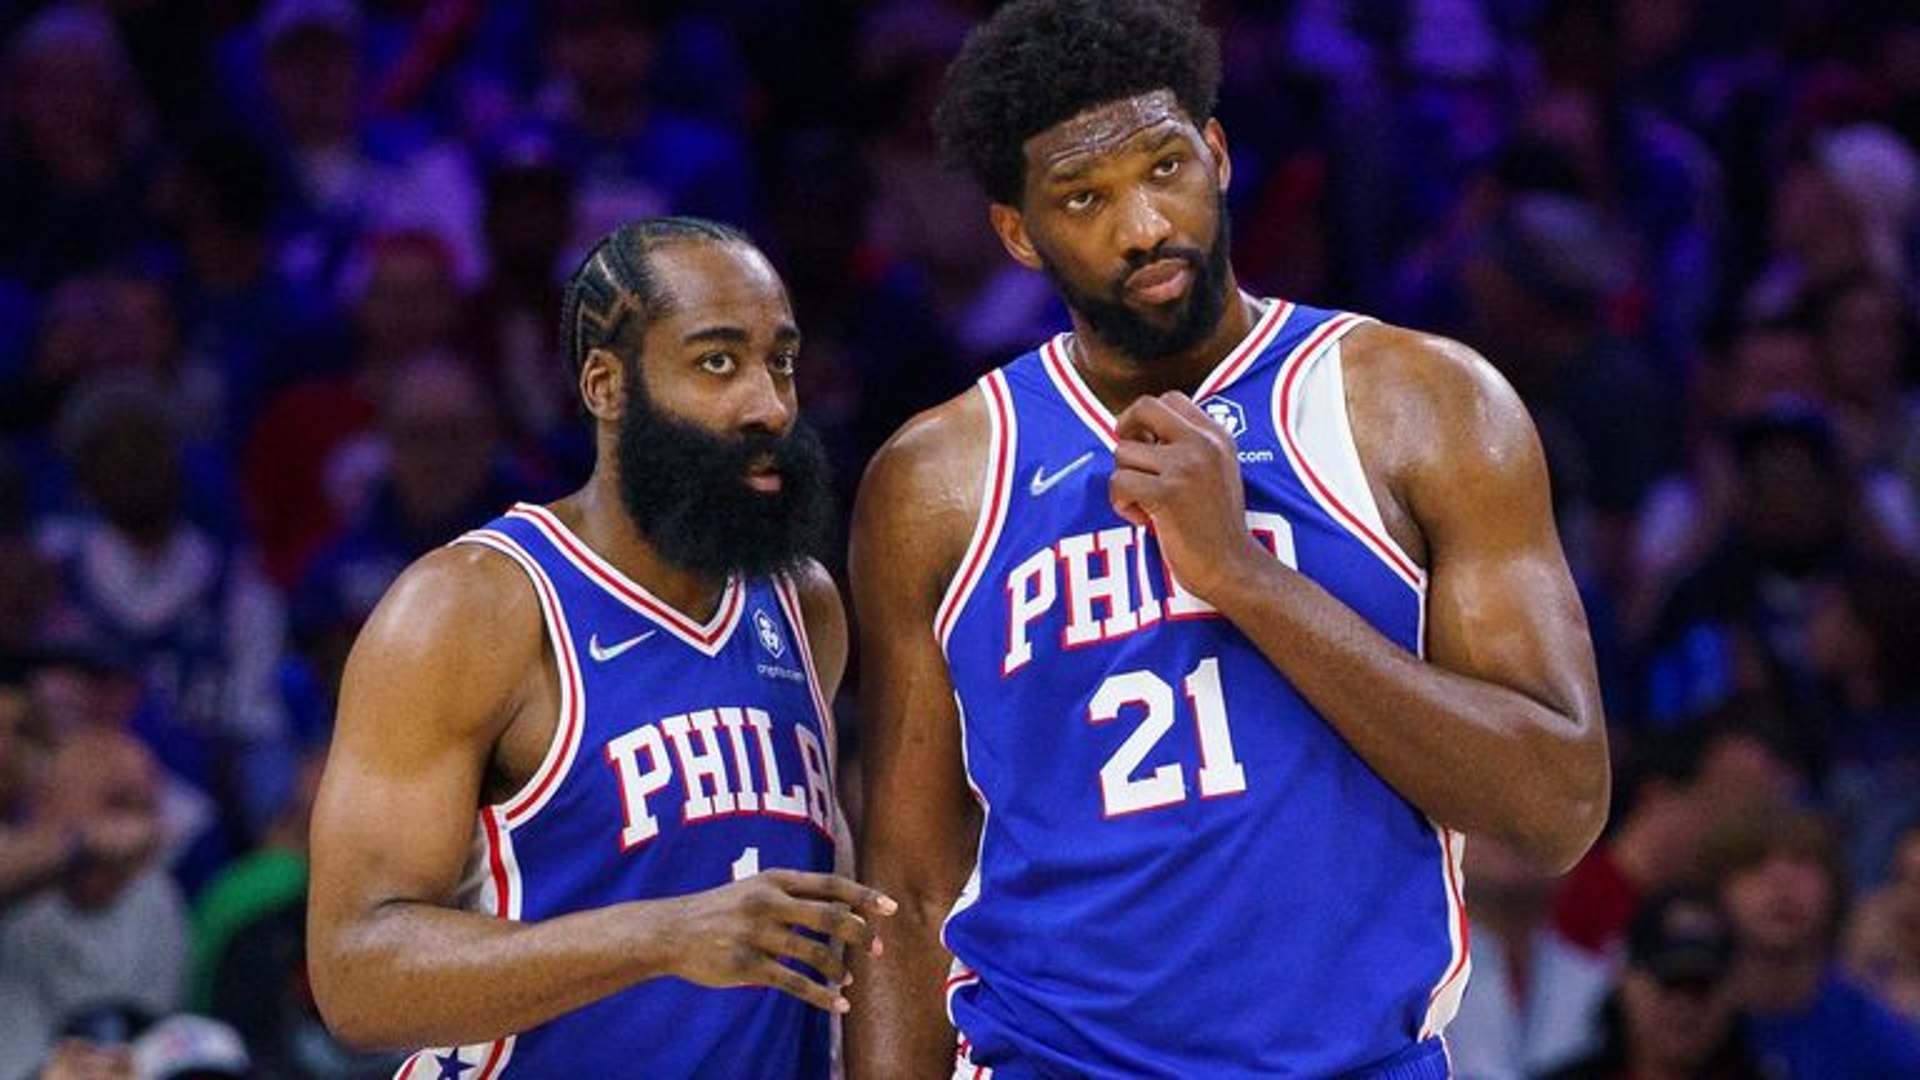 Philadelphia 76ers vs Denver Nuggets NBA Live Stream, Schedule